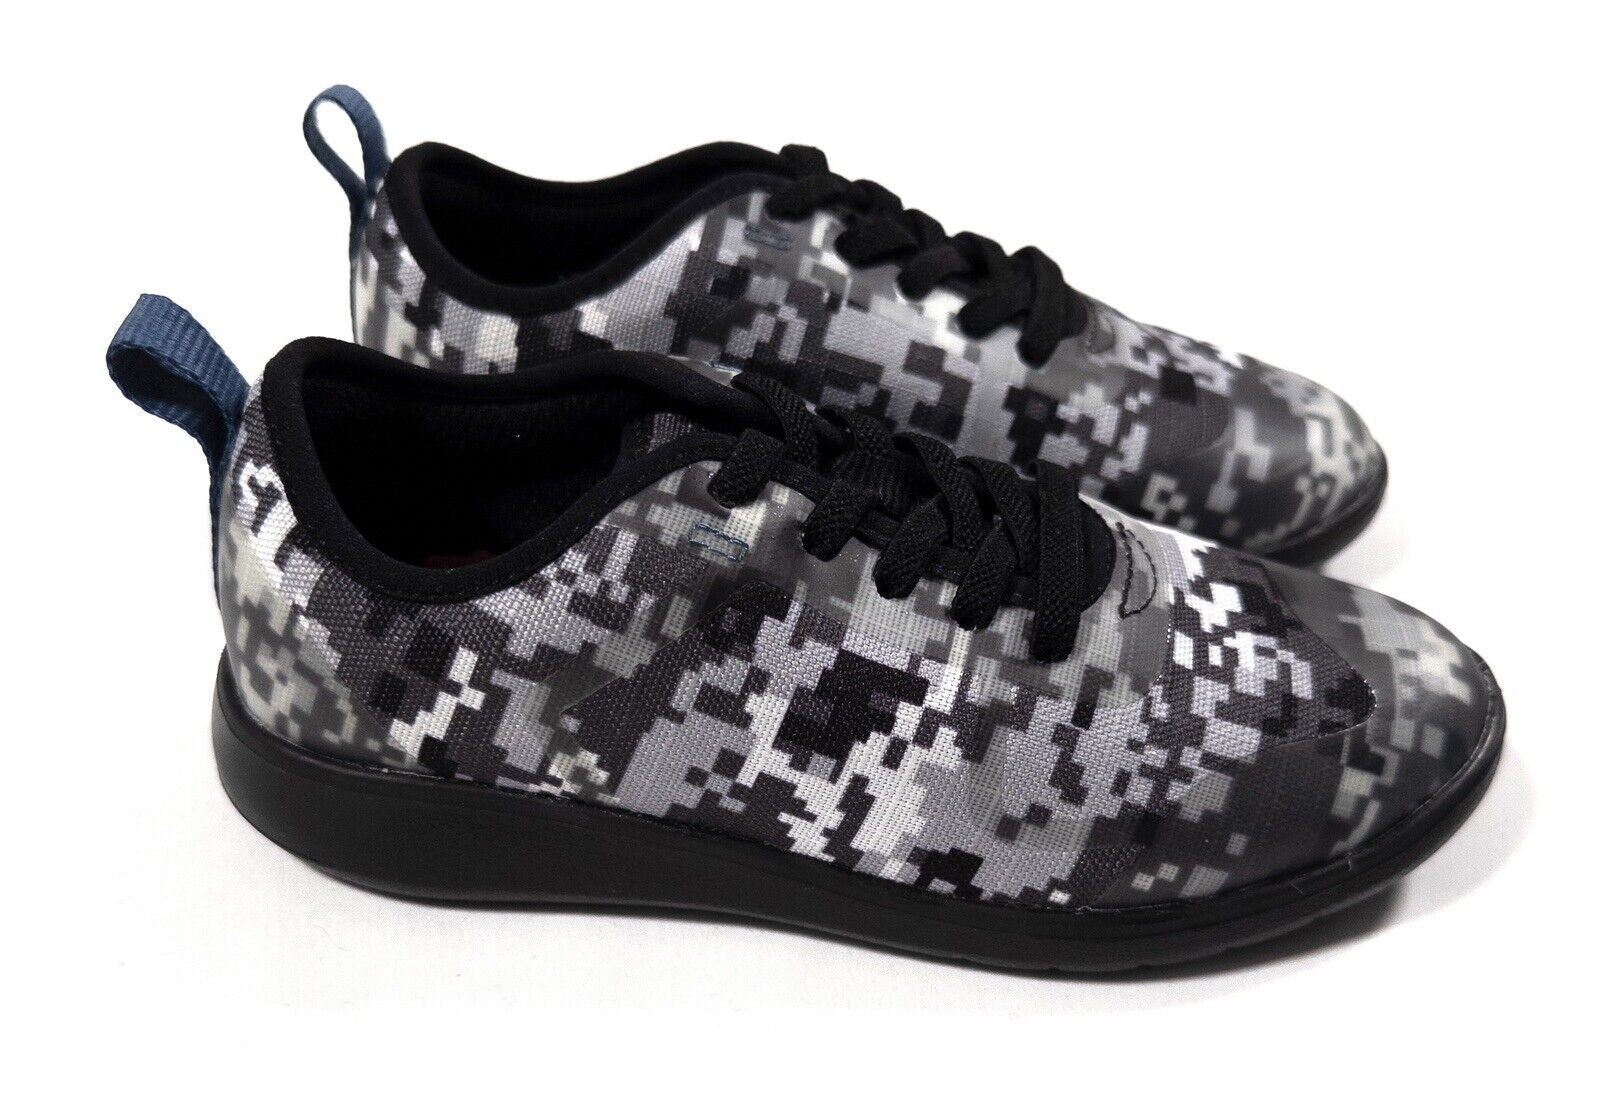 CLARKS Infant Boys Black White Grey Trainers Shoes Slip On Size UK 10.5 G